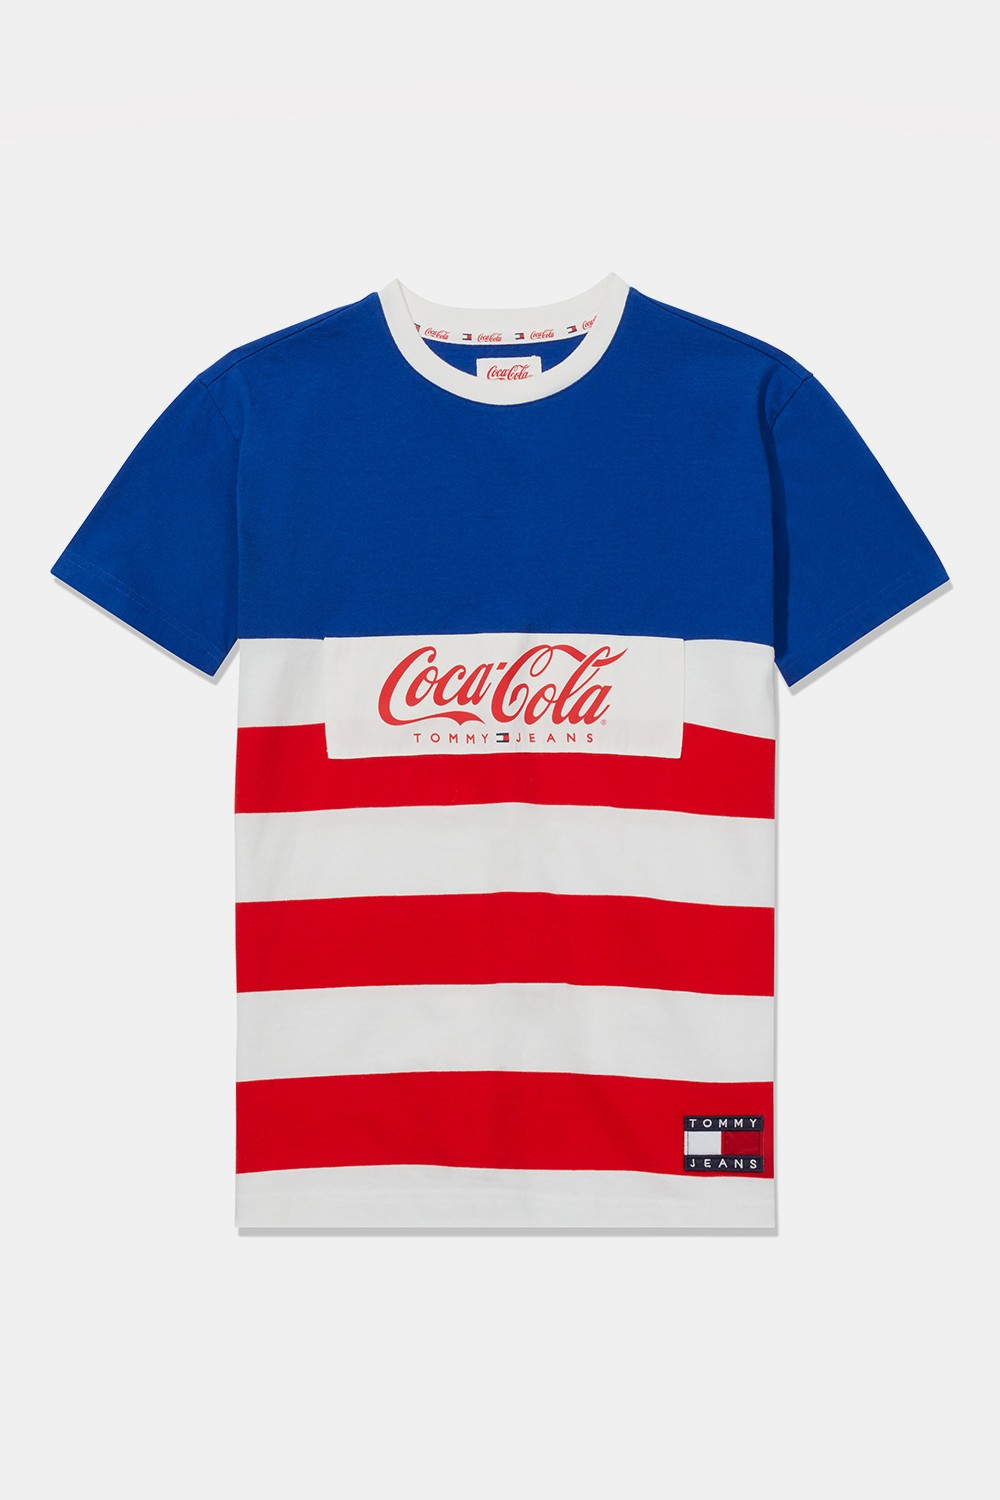 tommy hilfiger coca cola tshirt